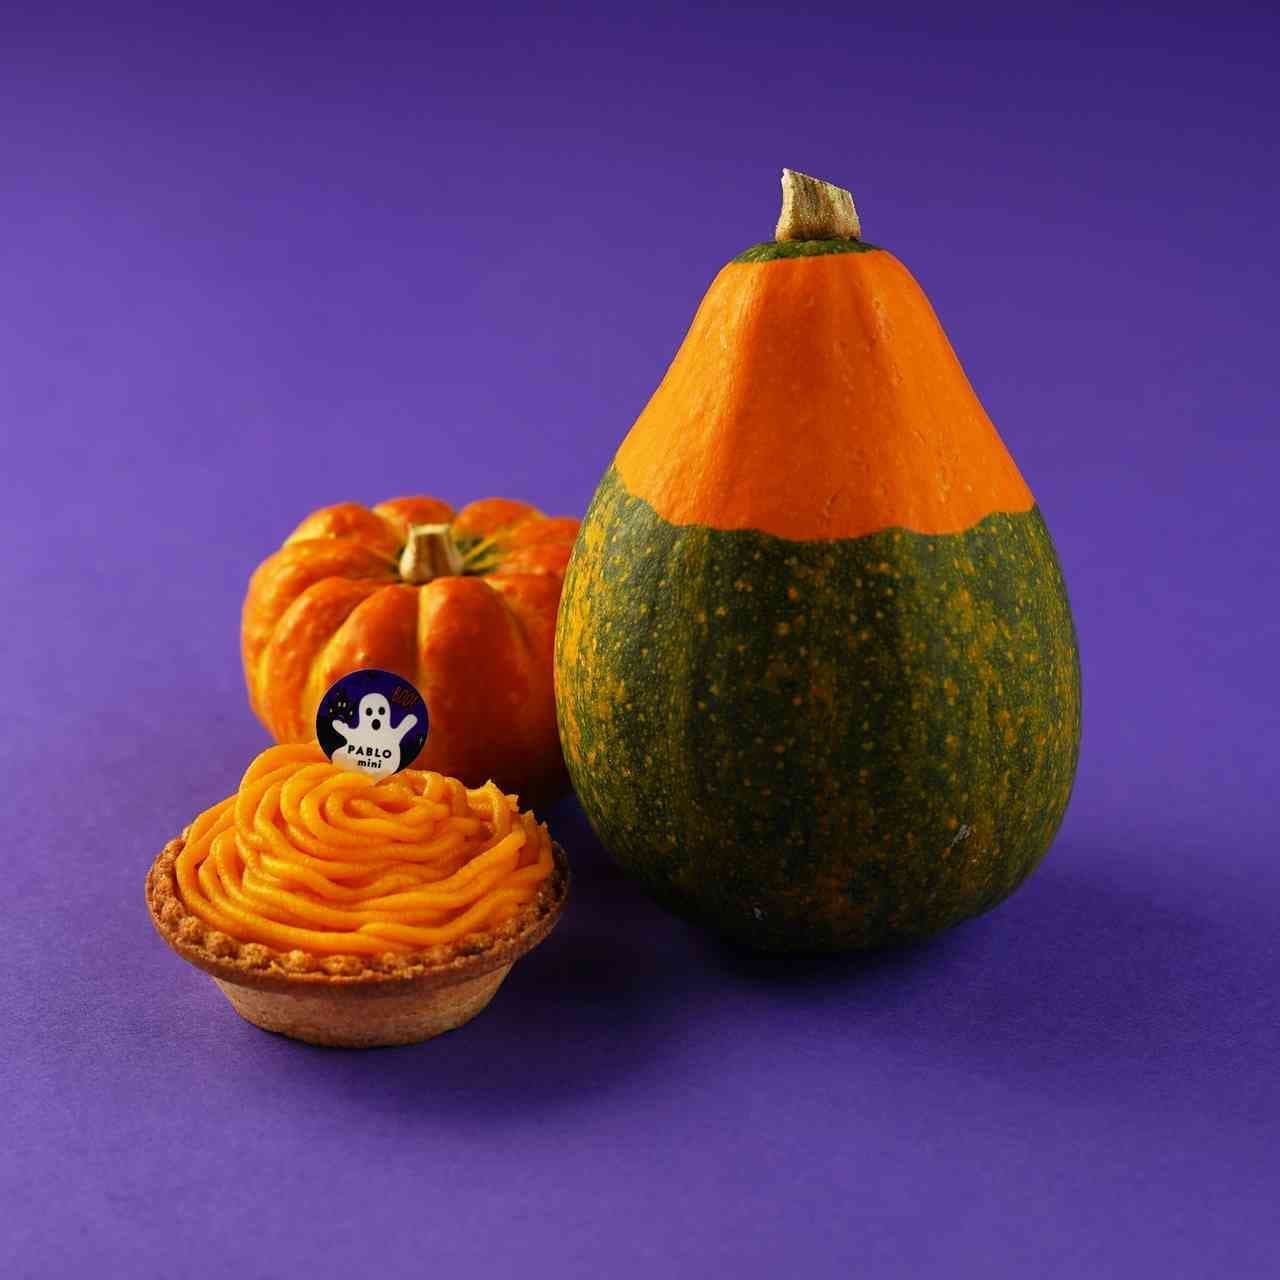 Pablo "PABLO mini - Halloween Pumpkin